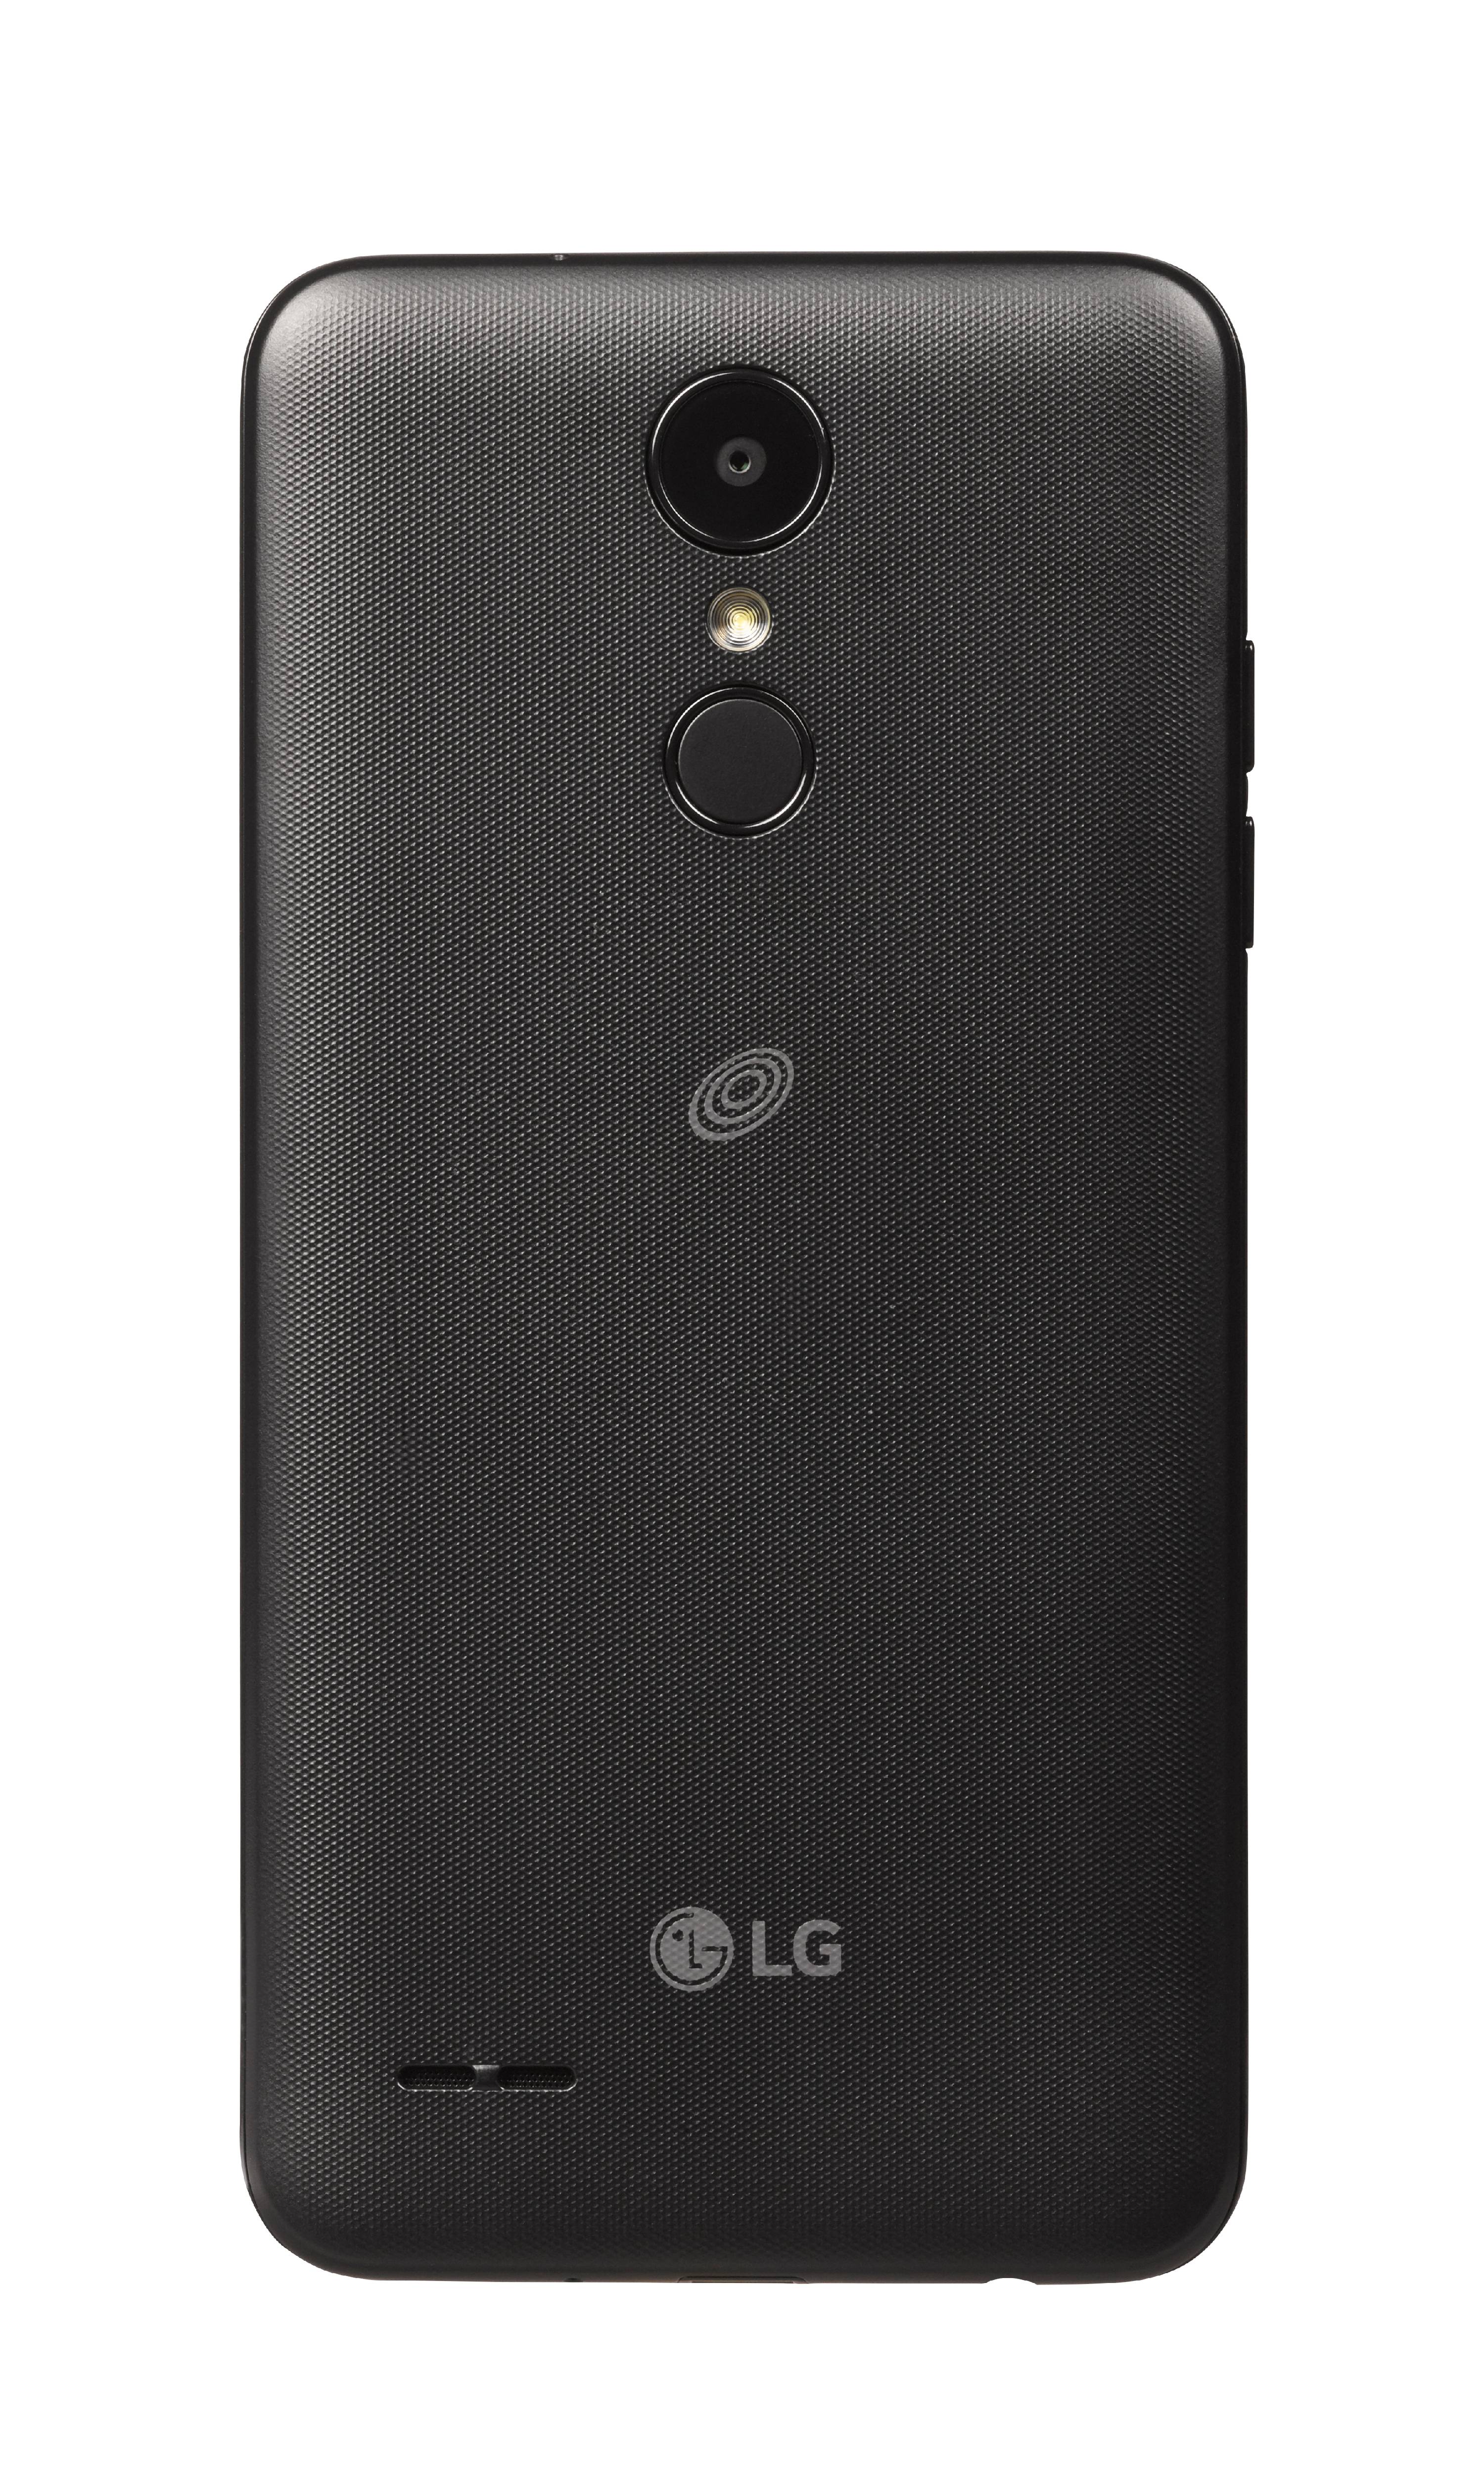 Total Wireless LG Rebel 4, 16GB, Black- Prepaid Smartphone - image 10 of 11